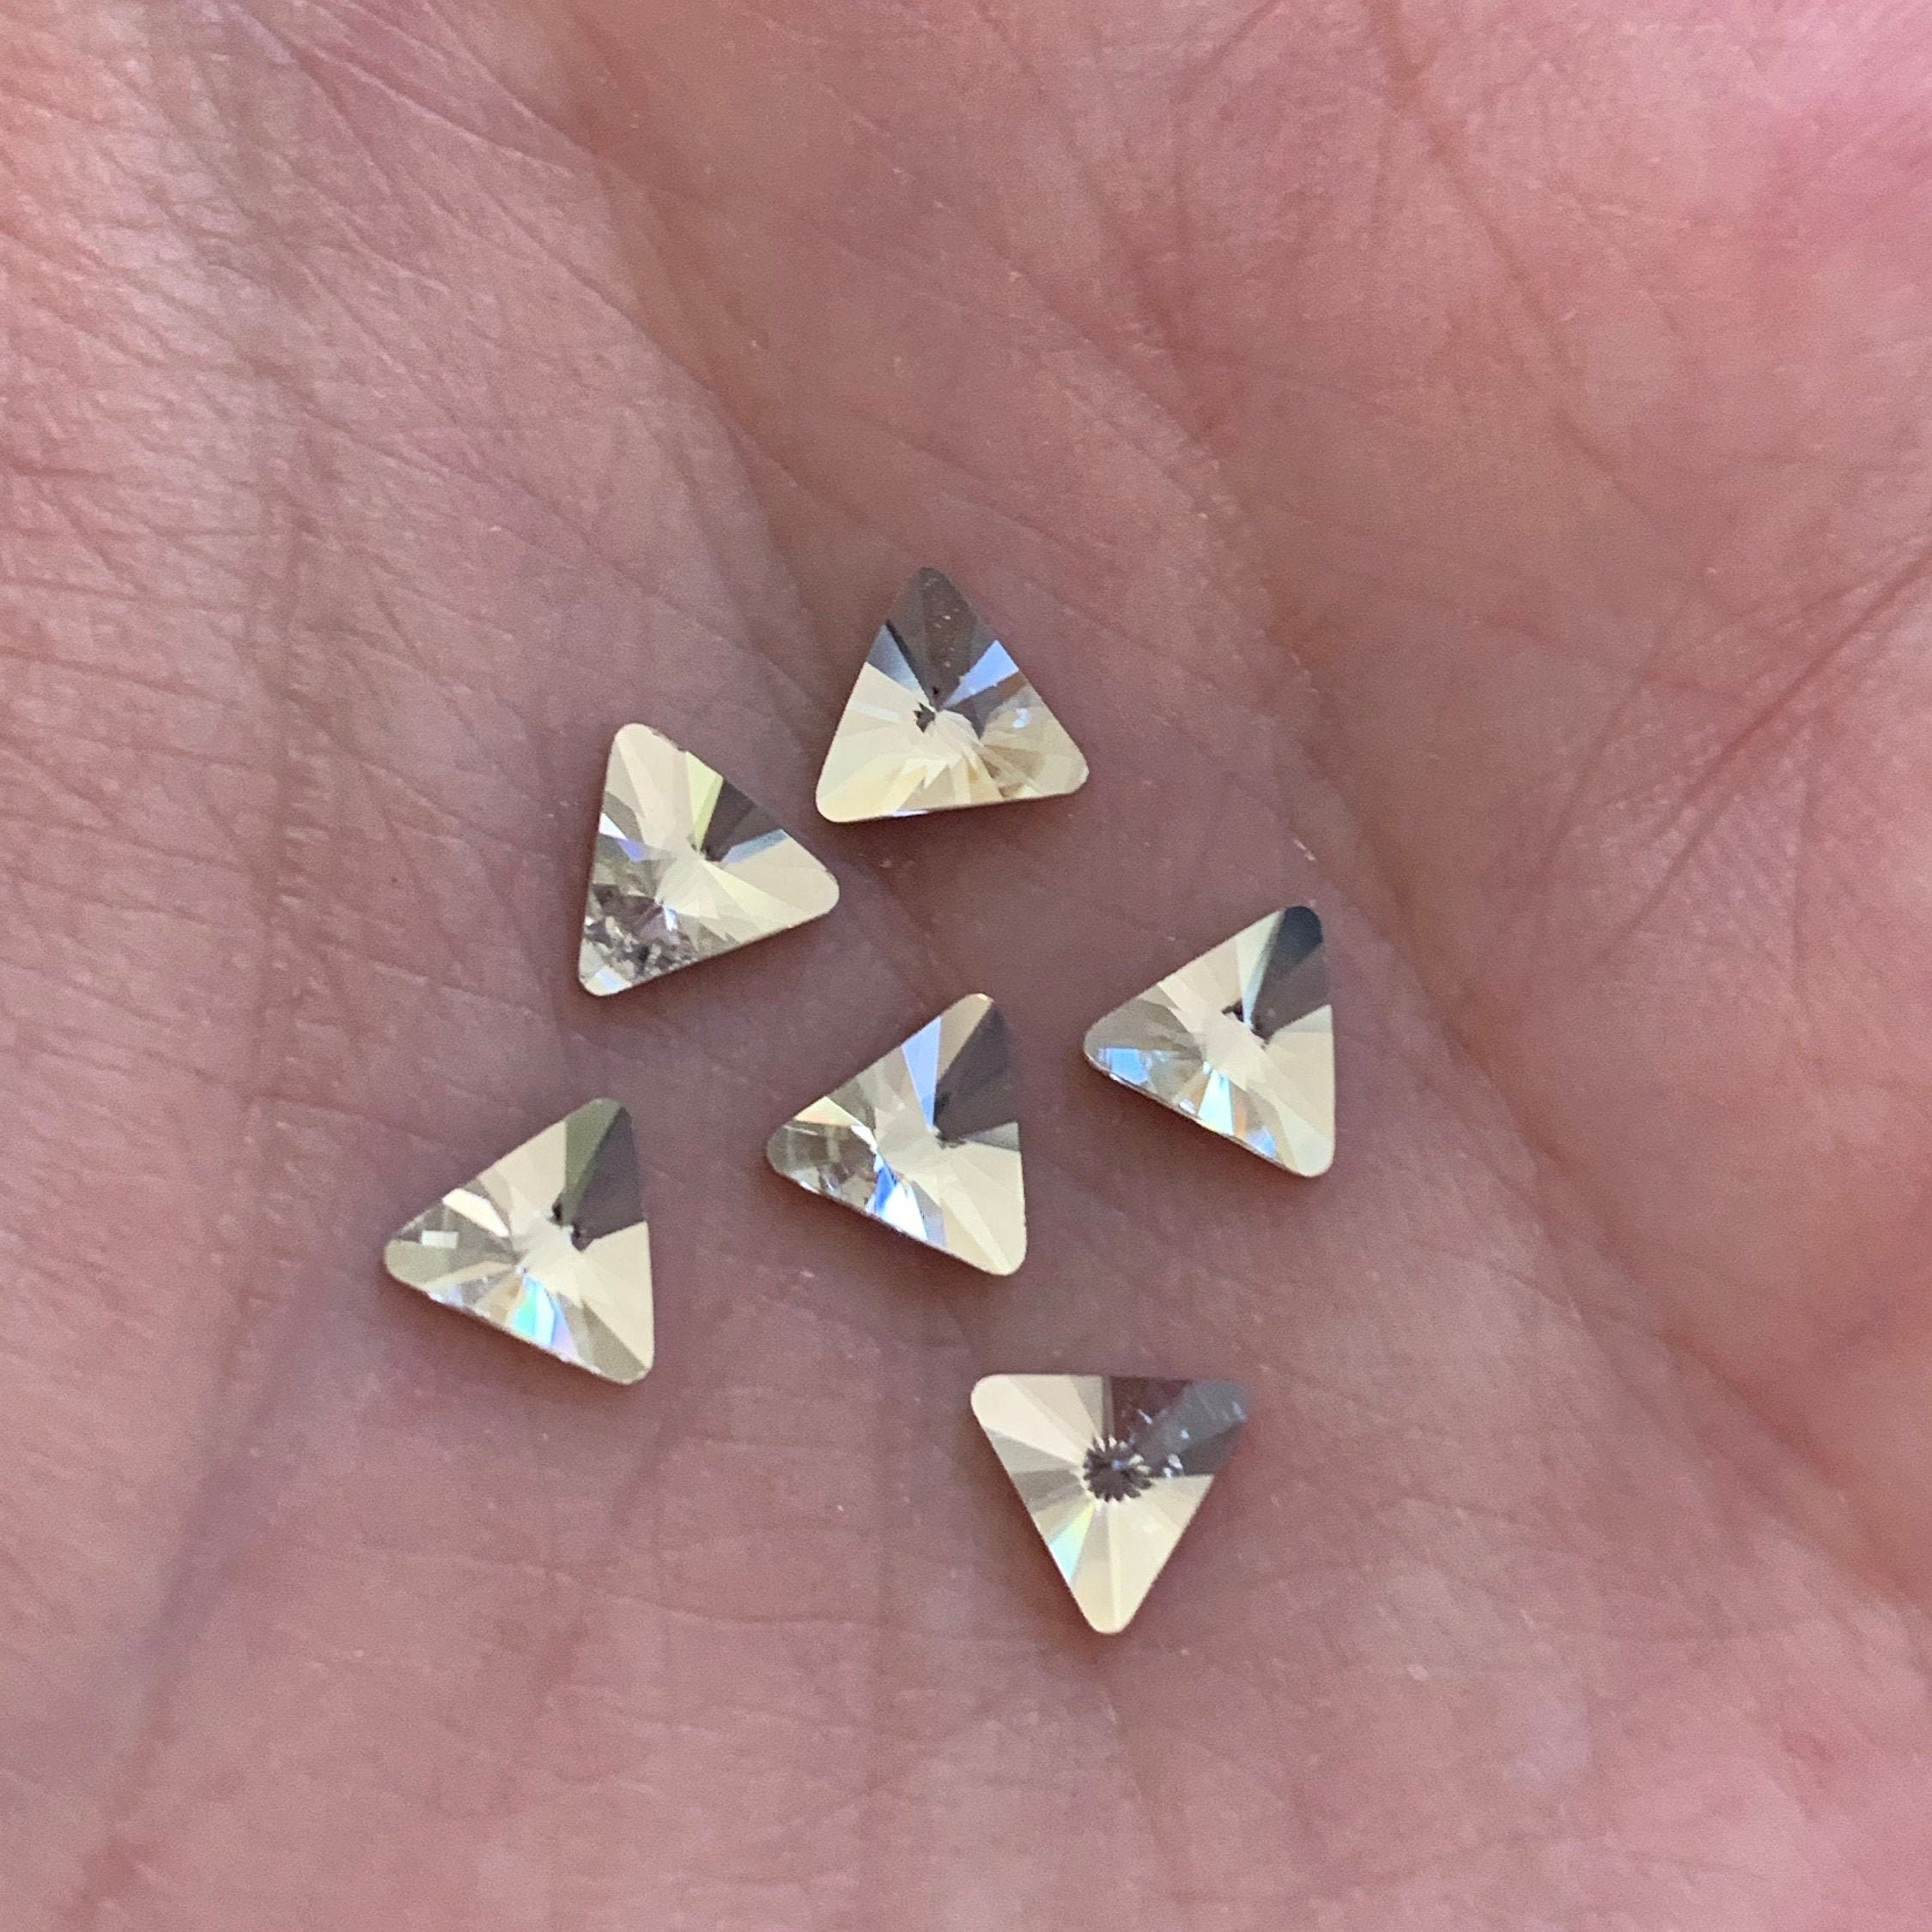 Swarovski Crystal AB Hotfix Rhinestones SS30, 6.5mm, Swarovski  Rhinestones(72pcs/pk)- Hot fix Crystals Swarovski Rhinestones